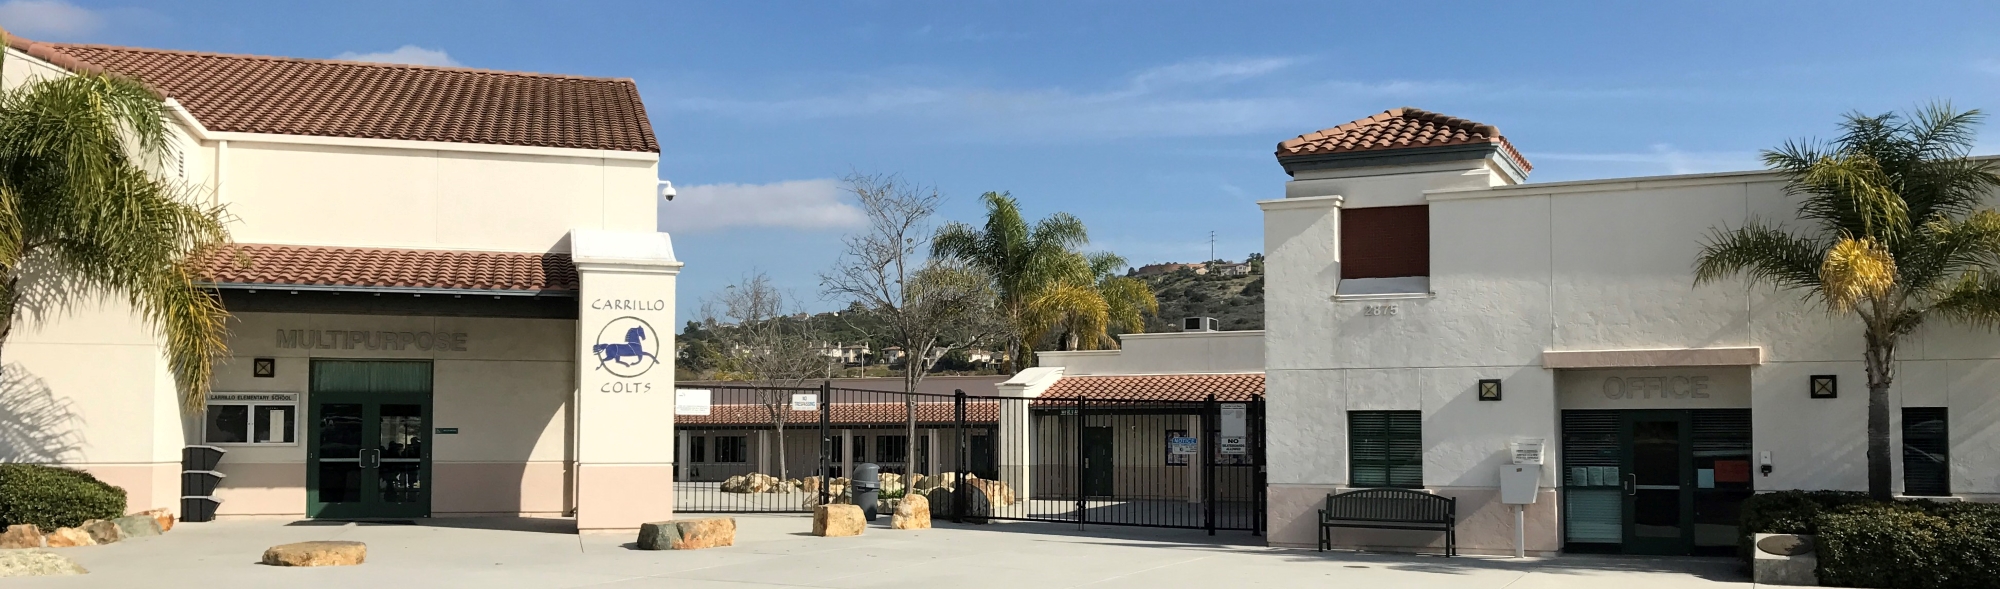 Home Carrillo Elementary School